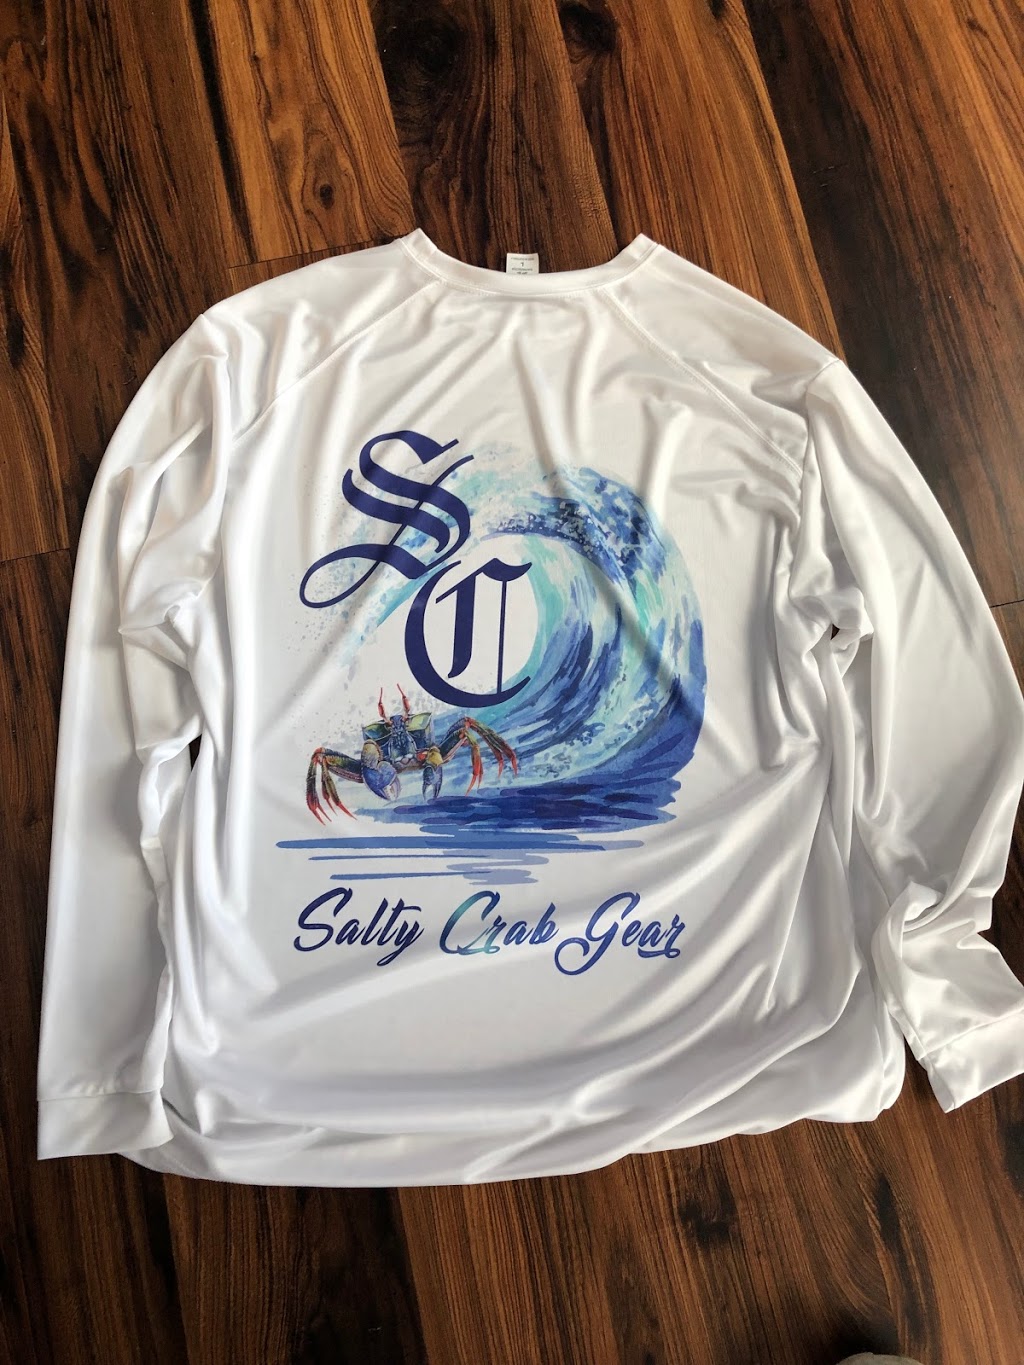 Salty Crab Outfitters | 2662 Bayshore Blvd, Dunedin, FL 34698, USA | Phone: (727) 408-5906